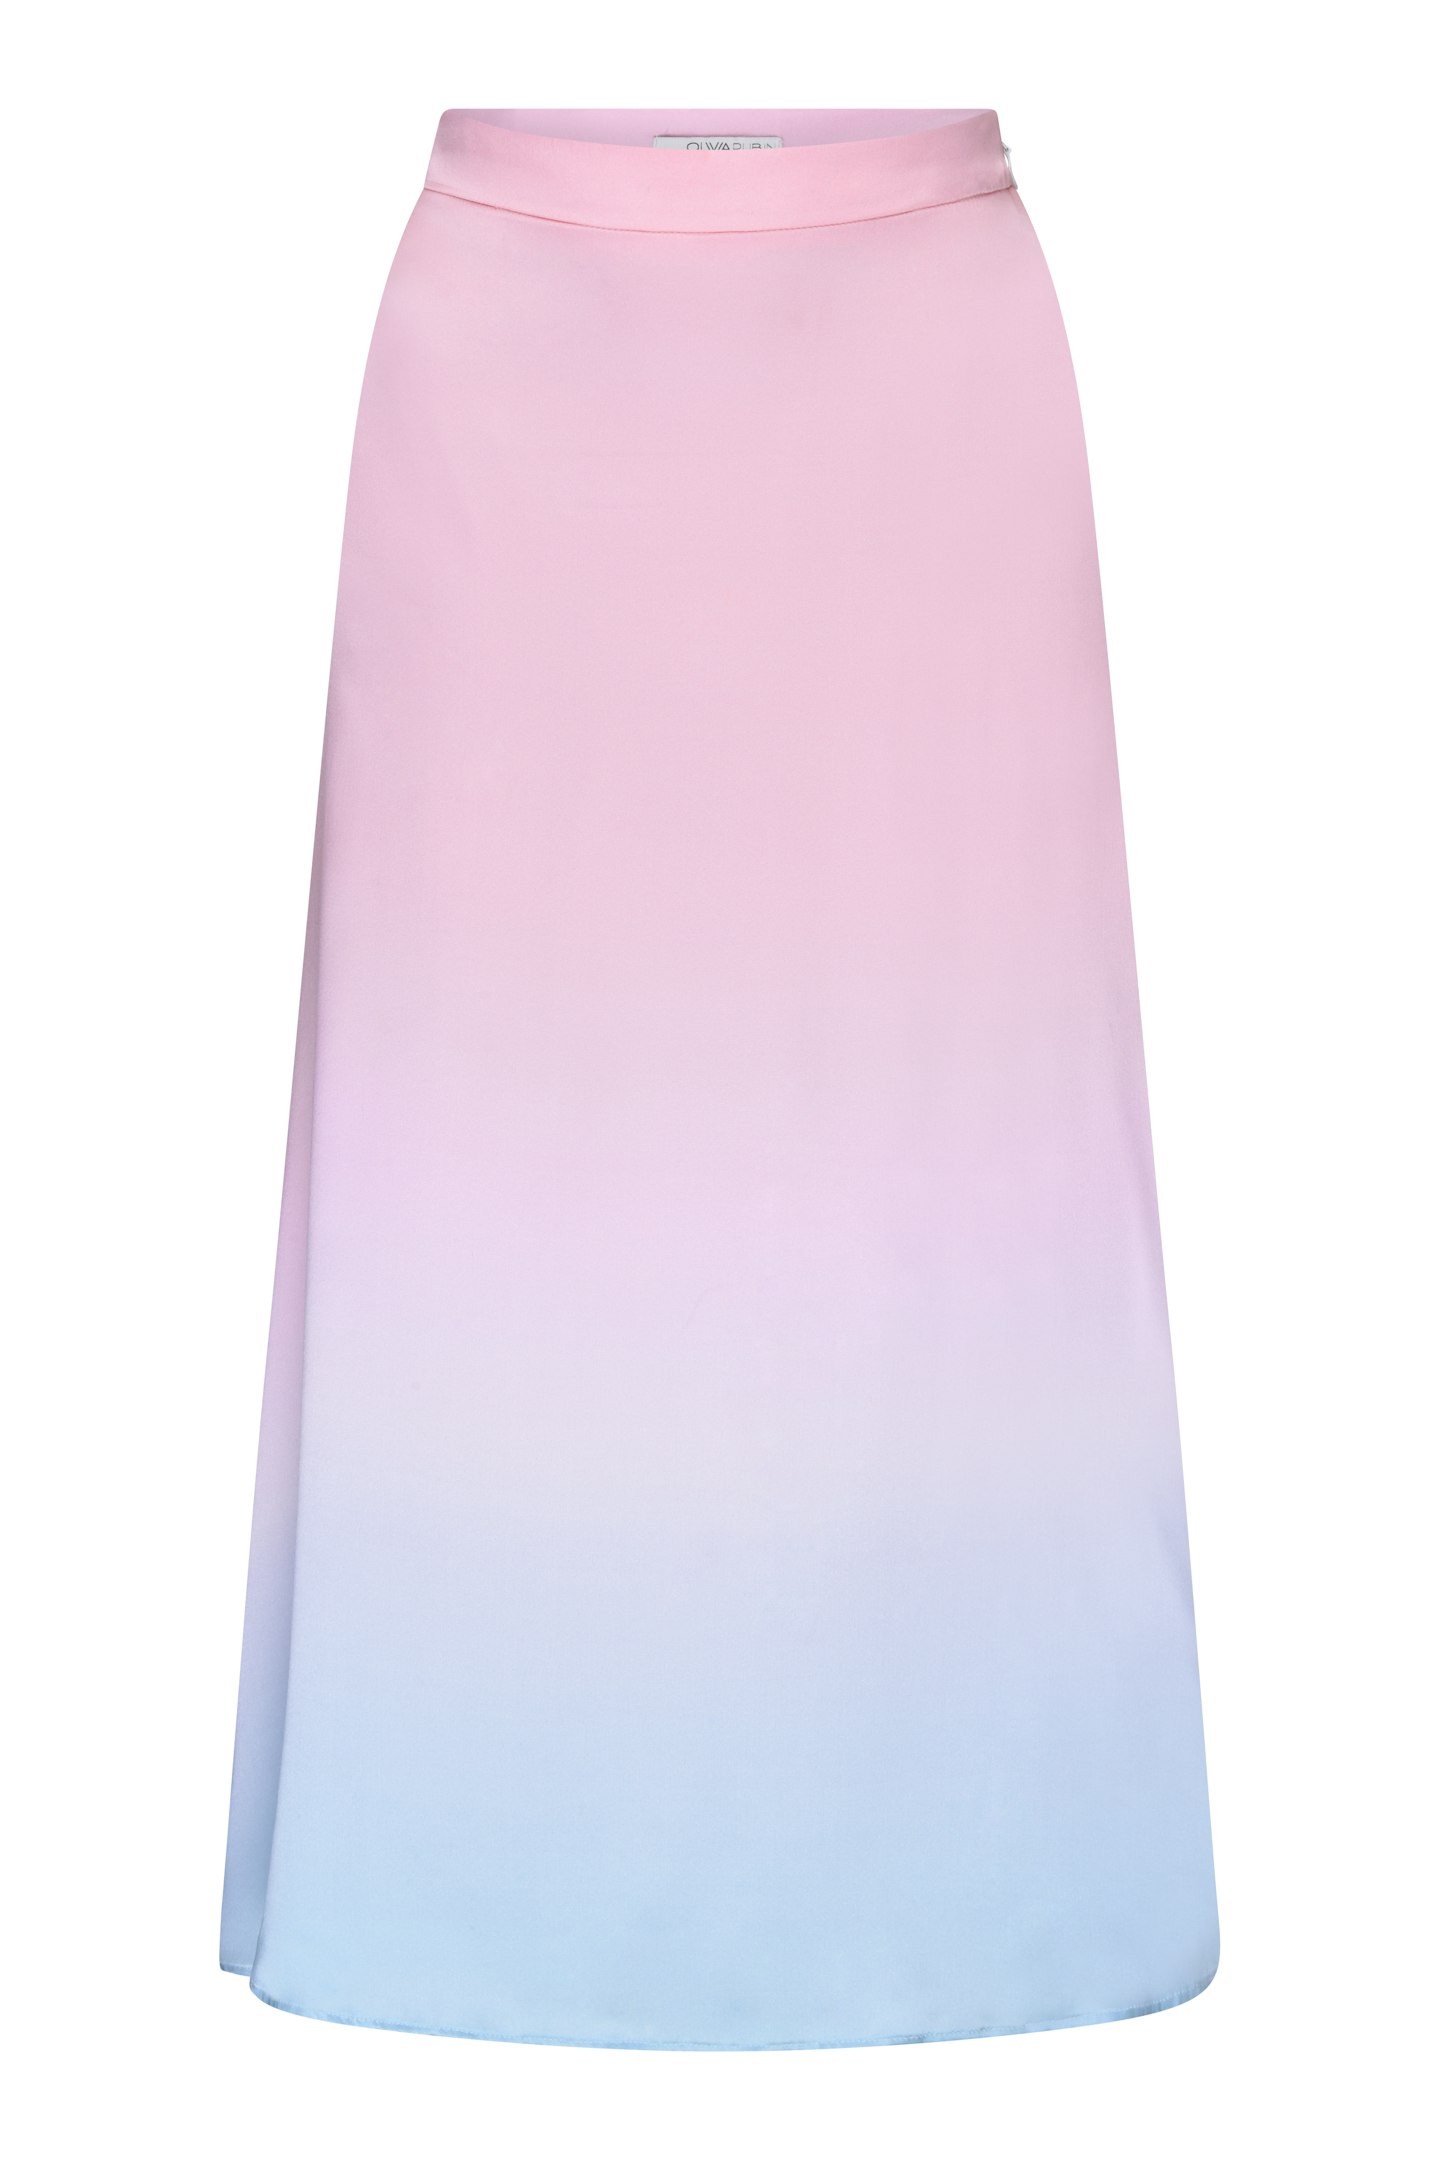 Ombre Skirt, £330